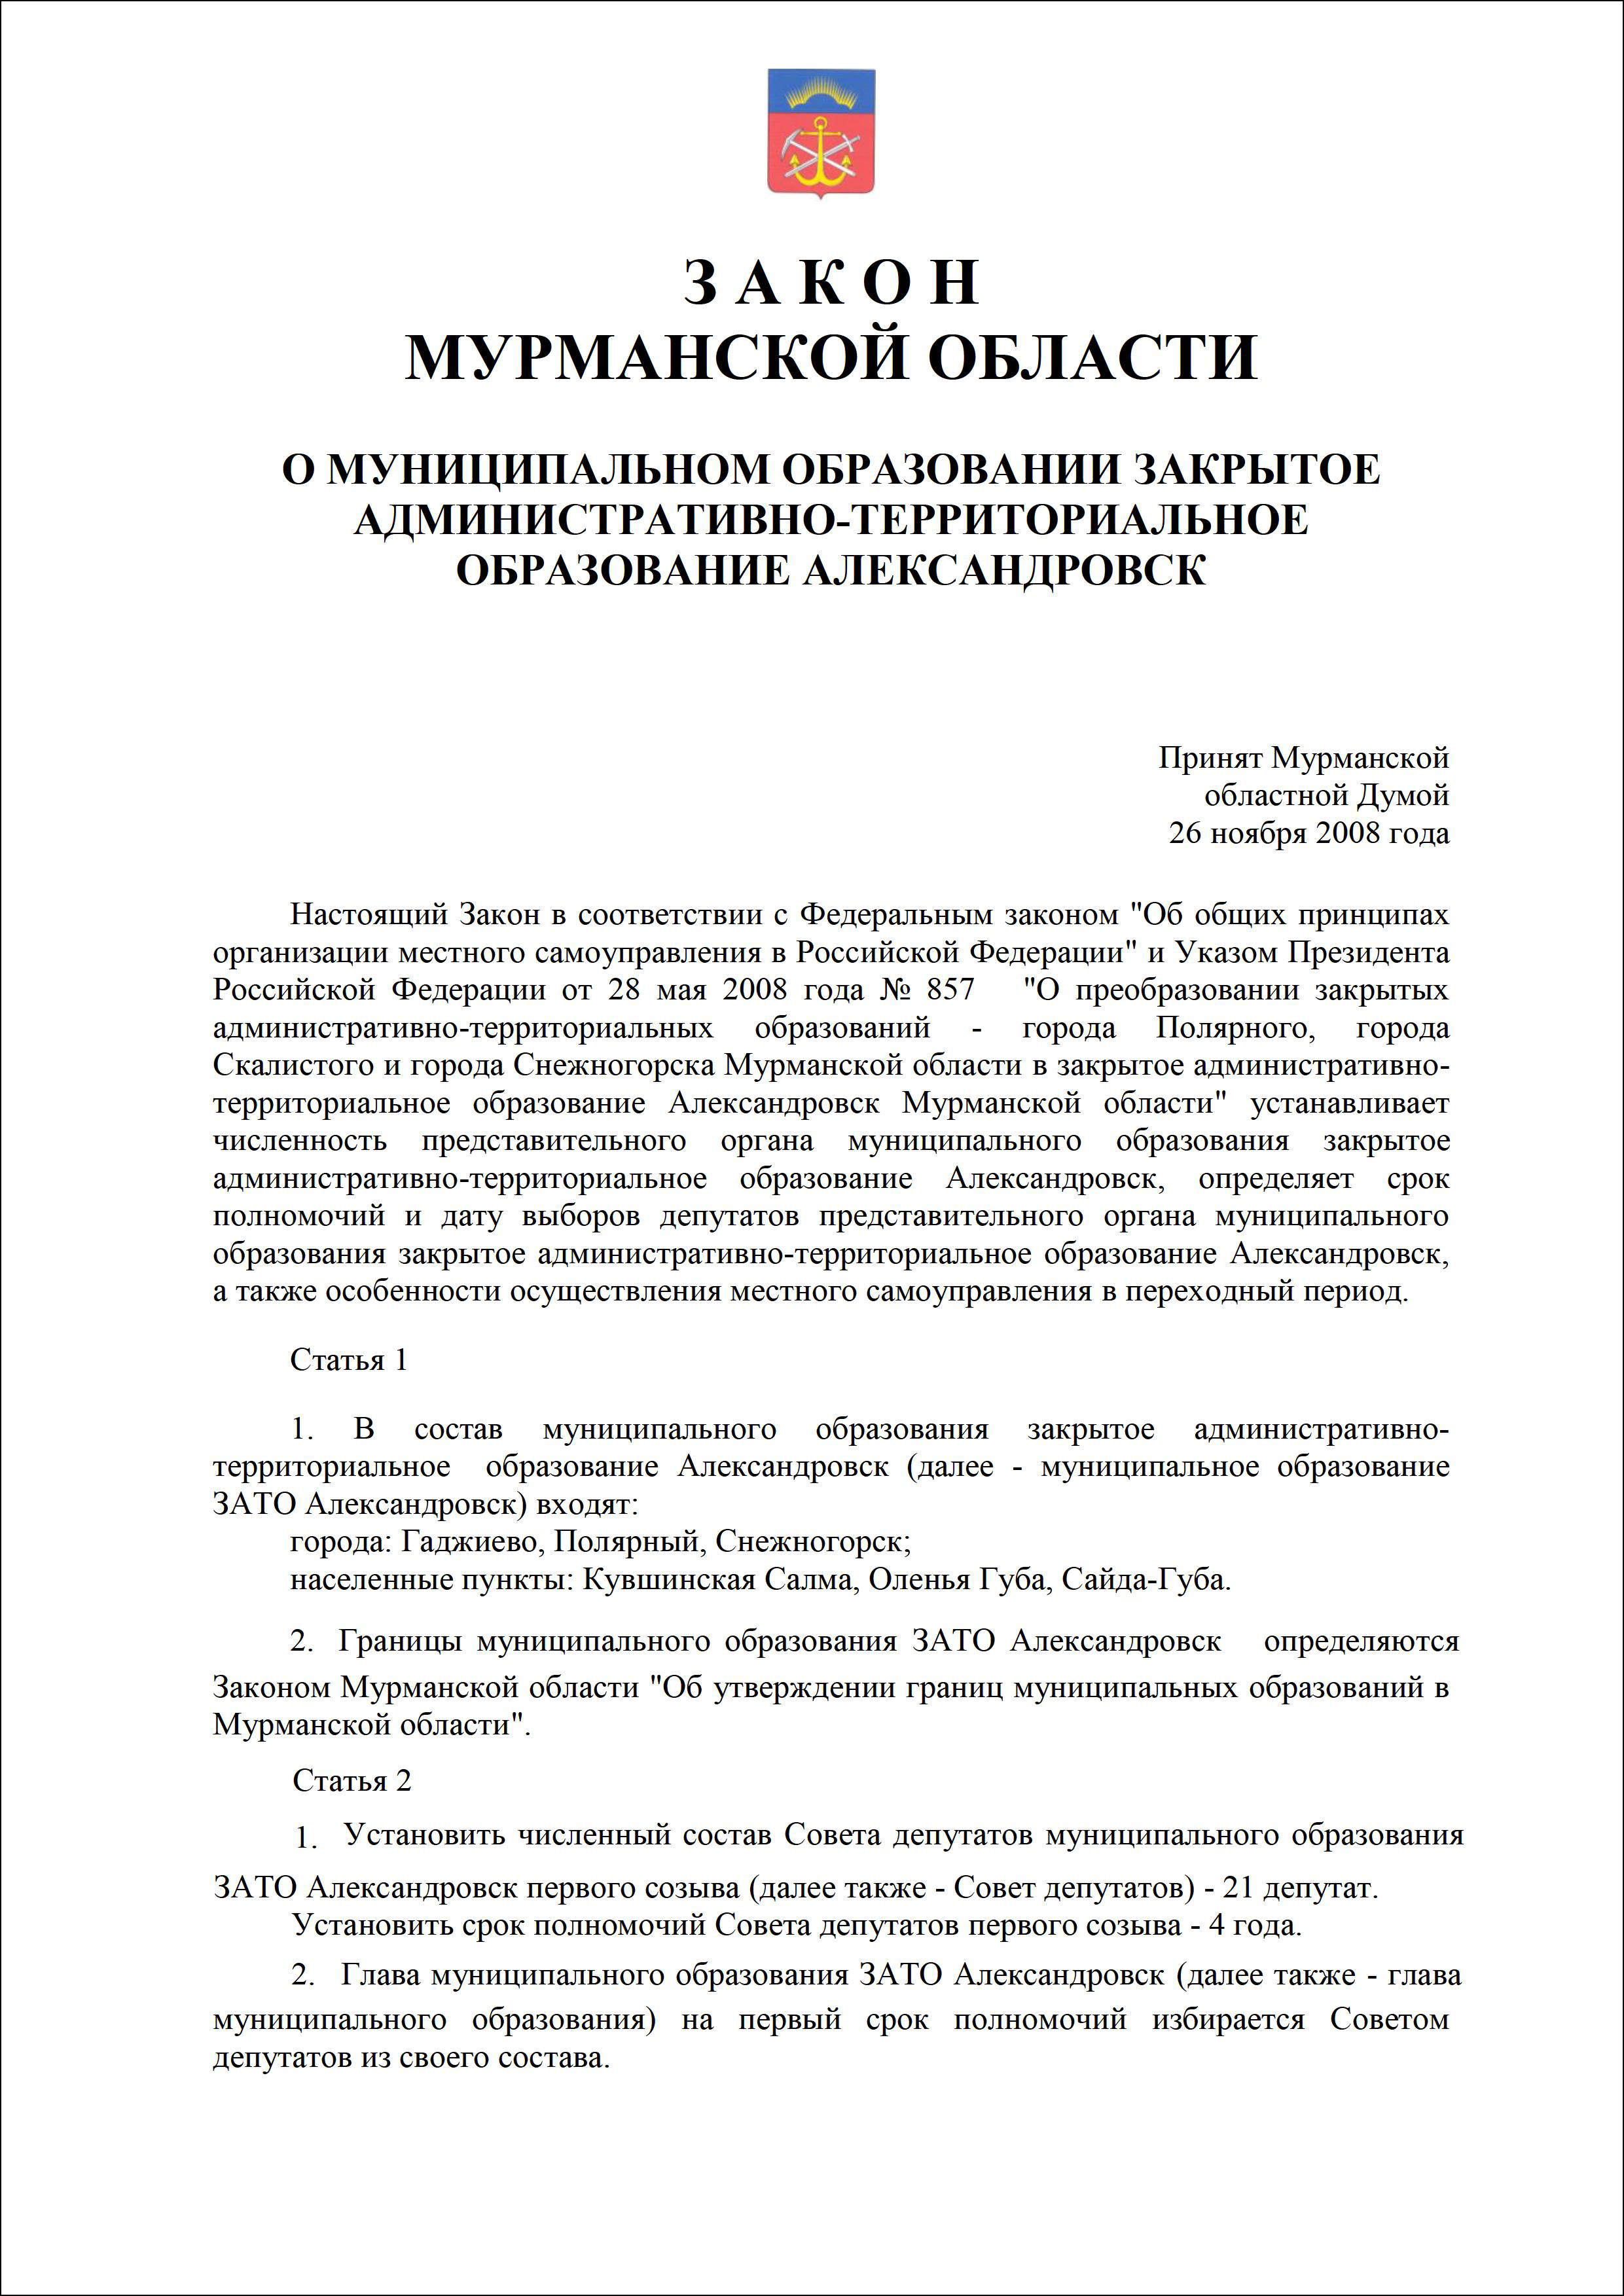 Закон Александровск.jpg